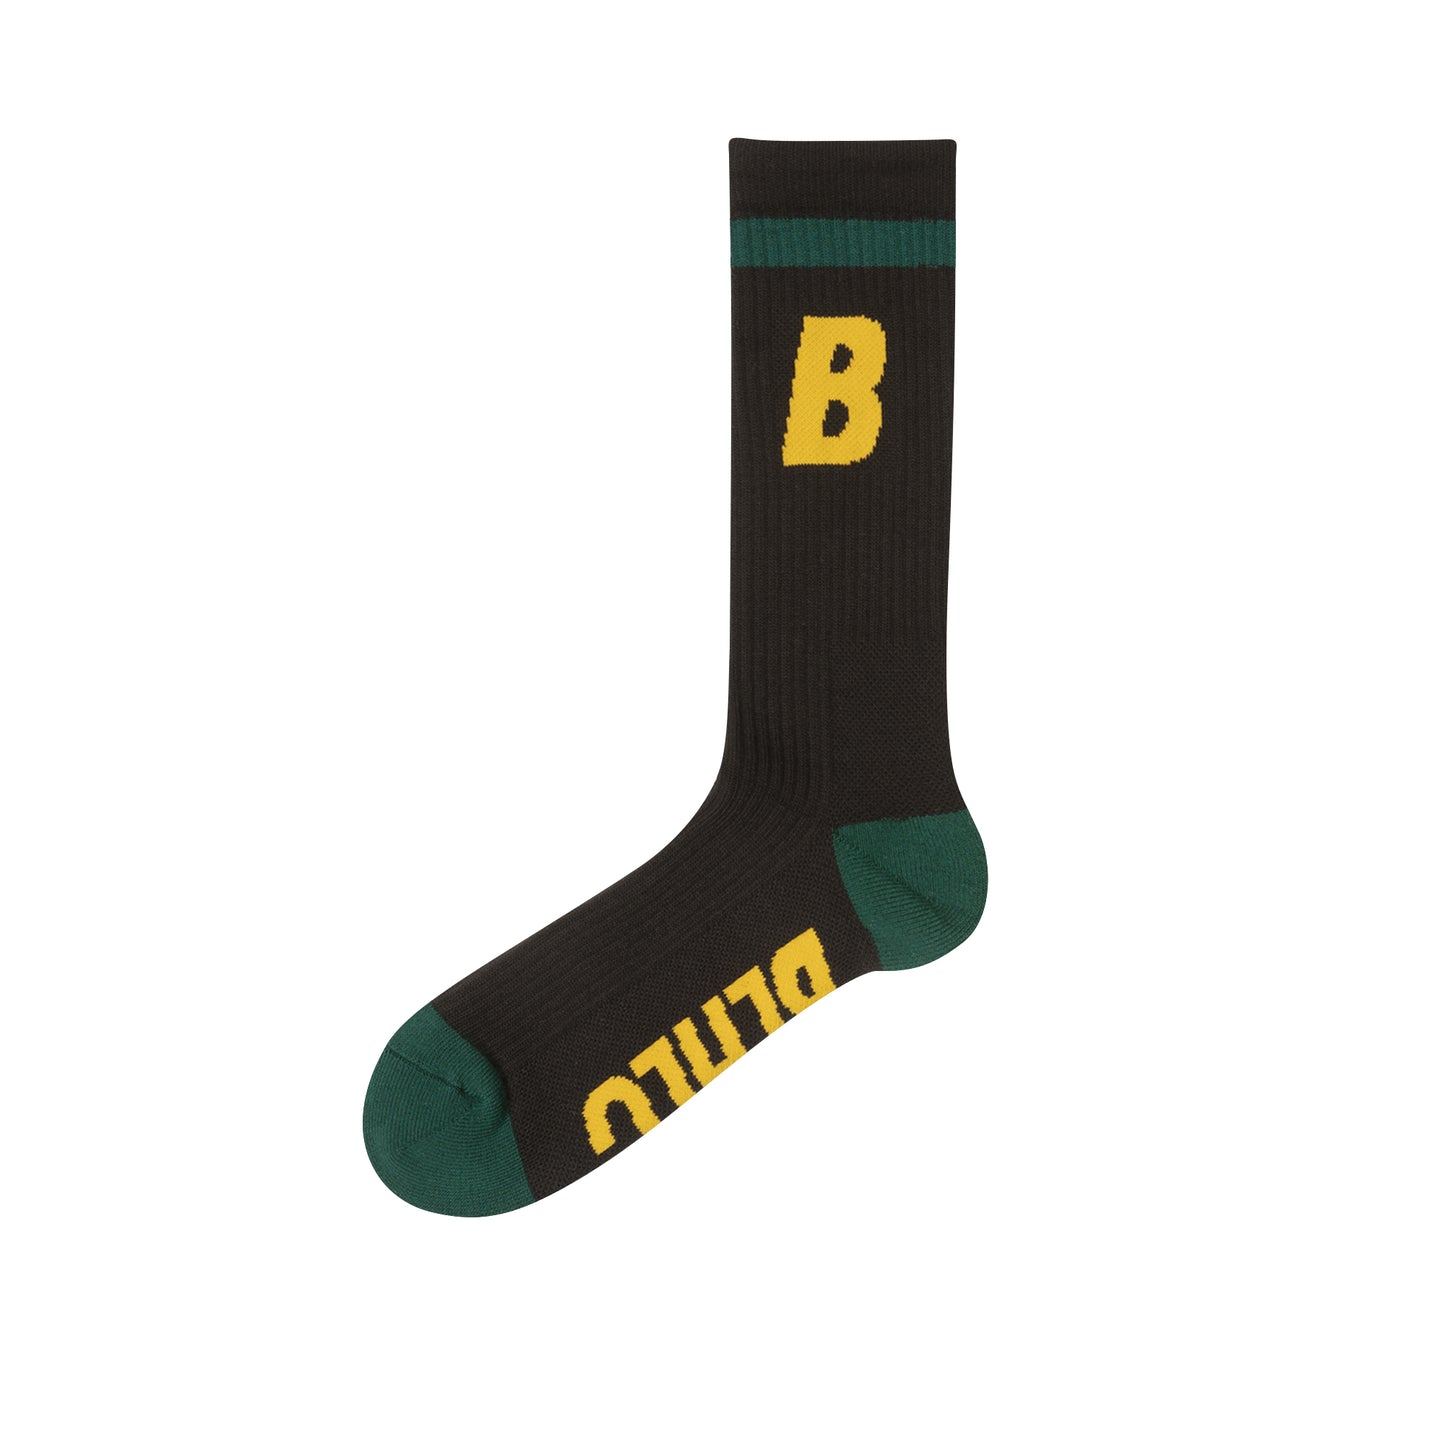 B Socks (black/yellow/dark green)